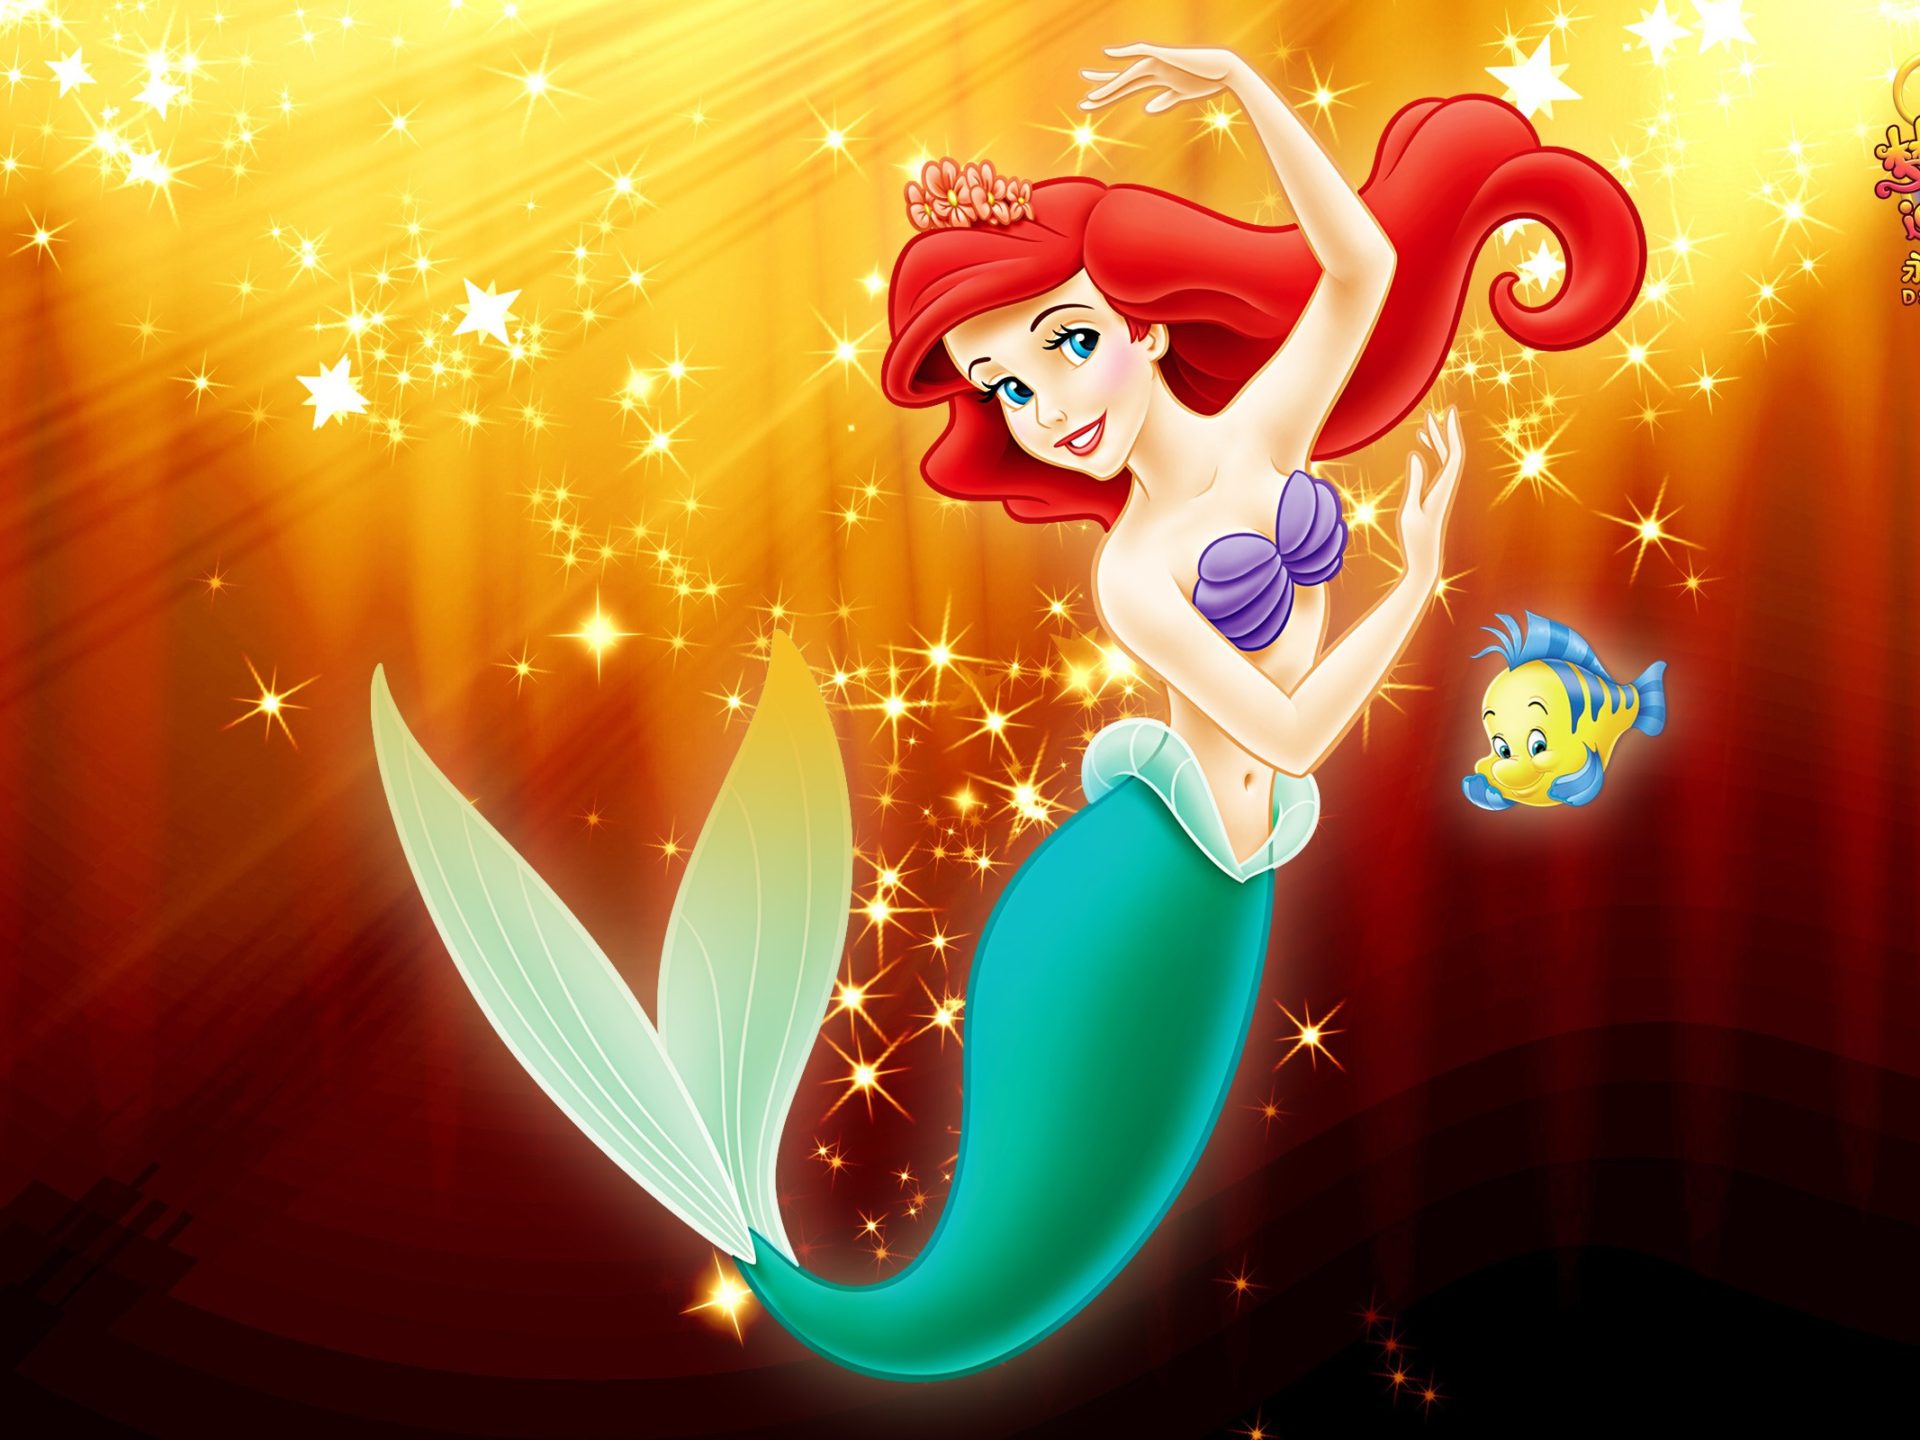 Little Mermaid's Ariel cartoon fantasy HD Wallpaper for Desktop, Wallpaper13.com